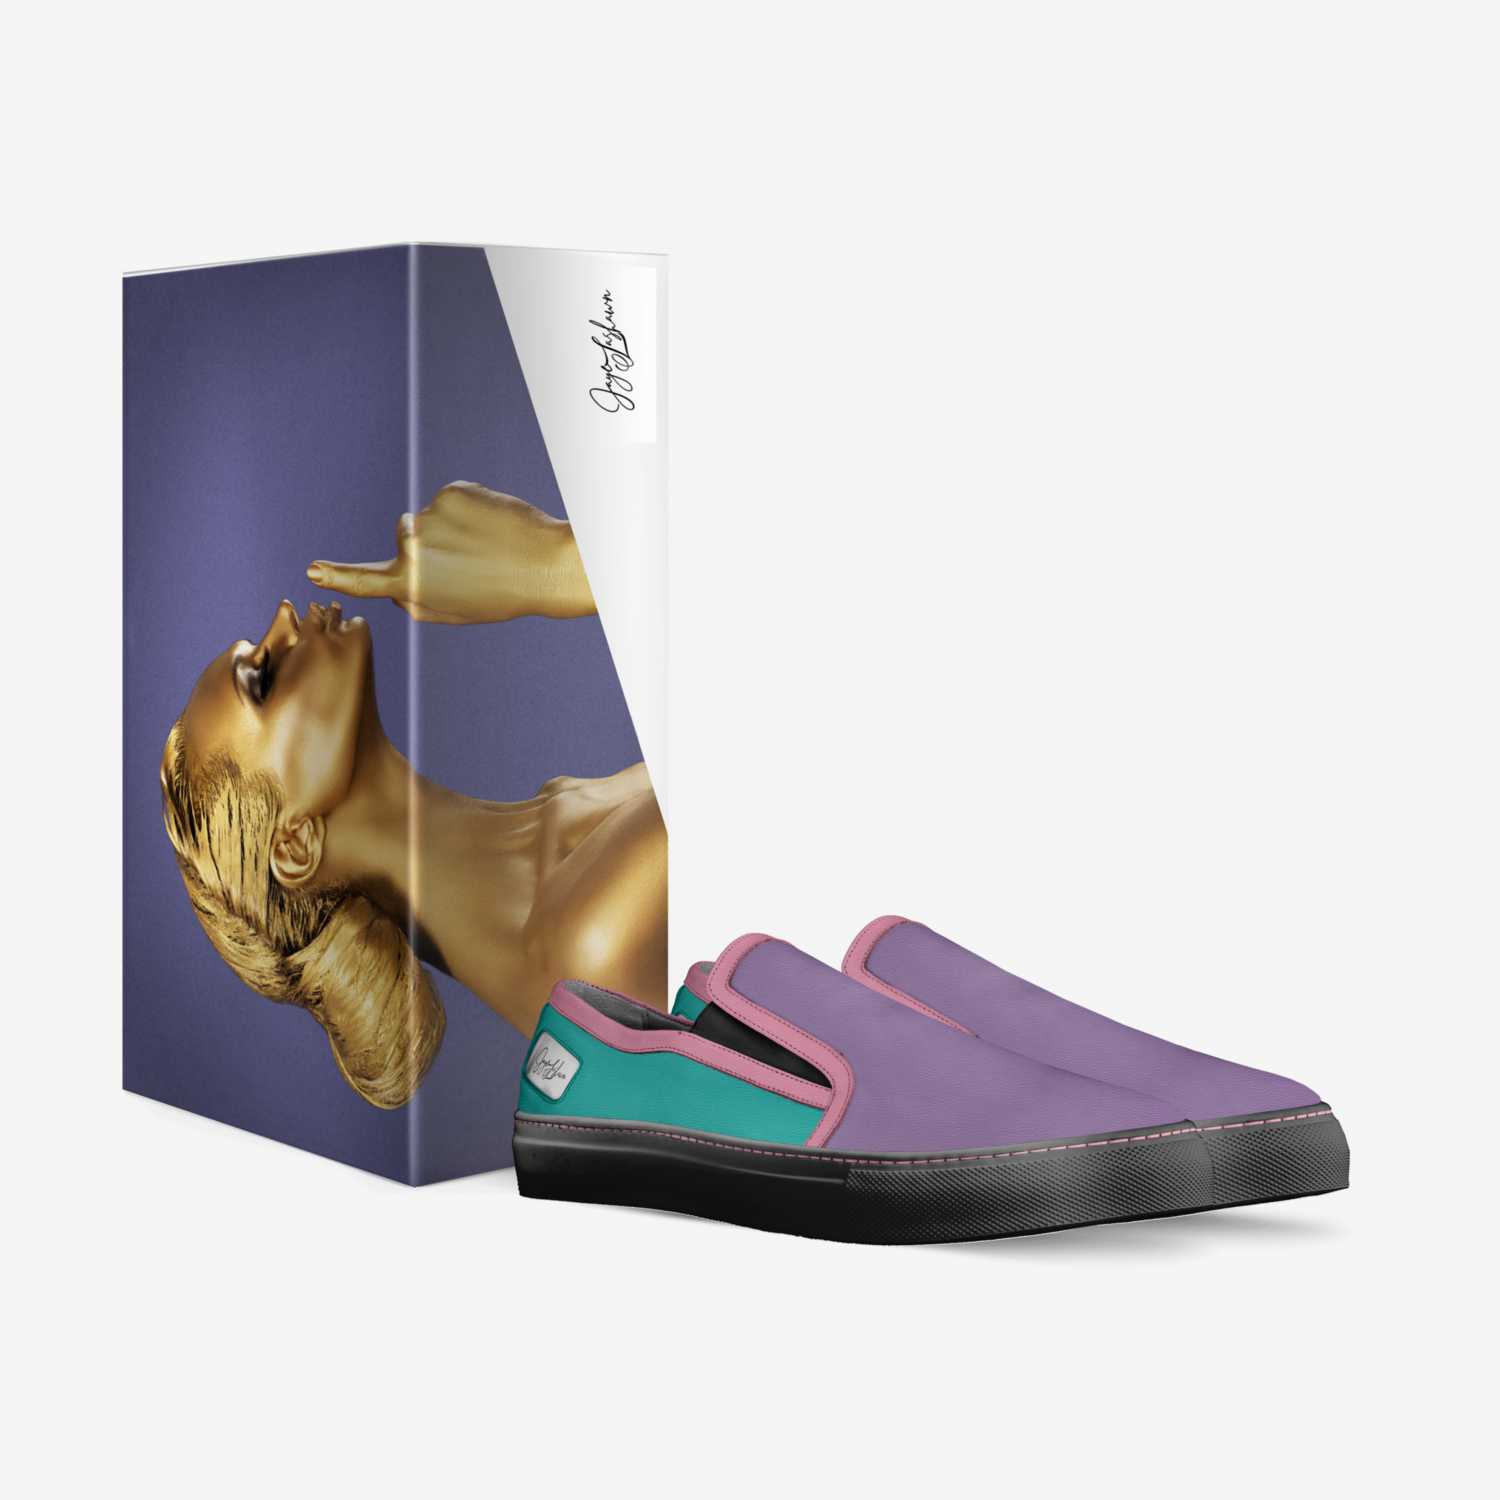 Nefertiti' custom made in Italy shoes by Jaye Lashawn | Box view